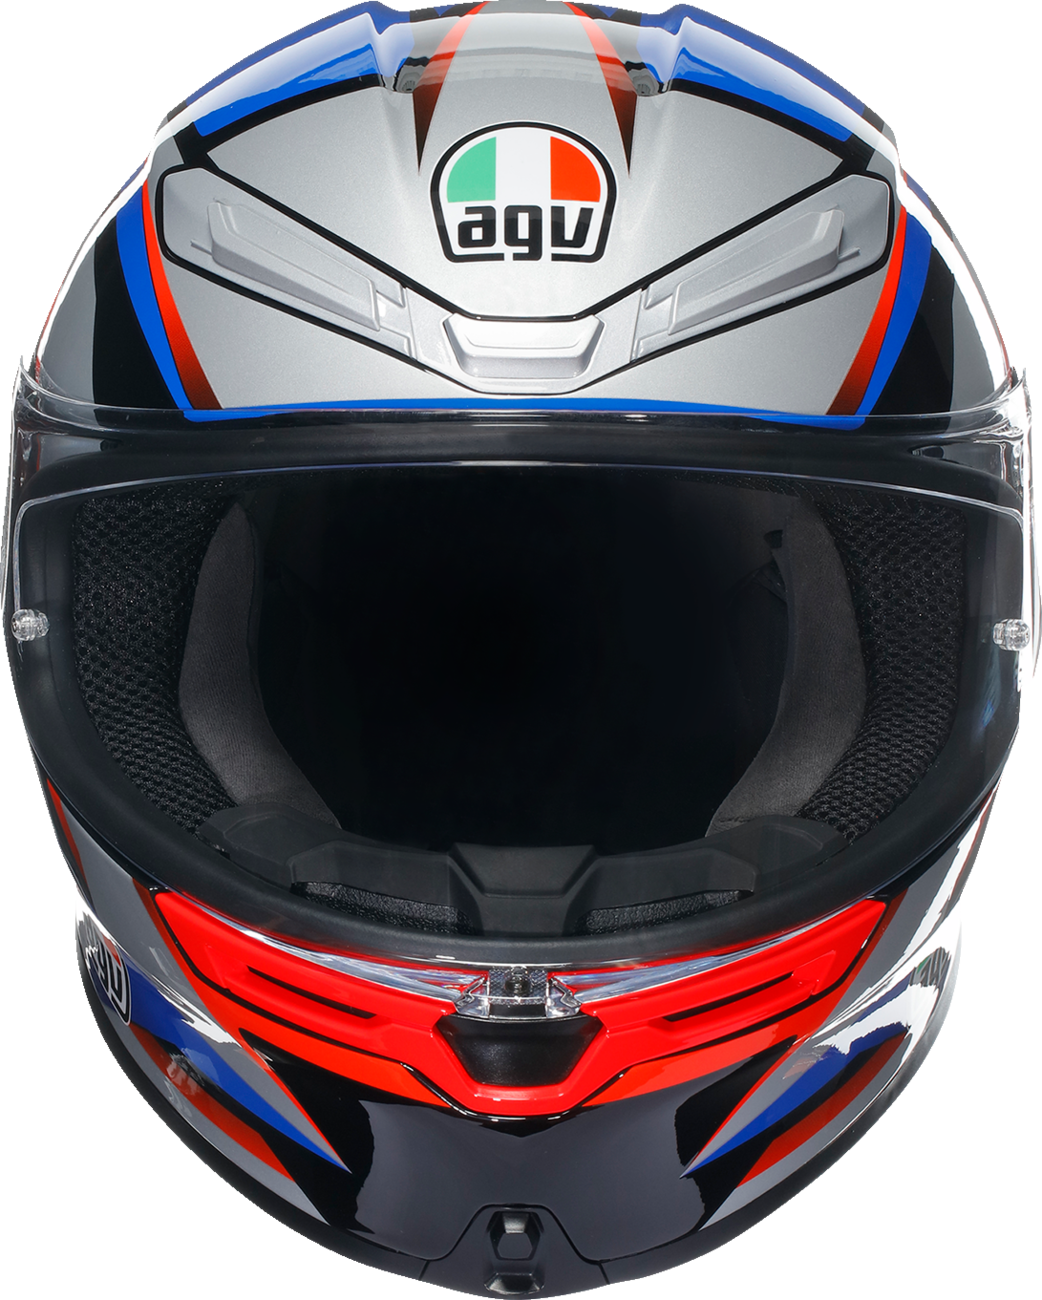 AGV K6 S Helmet - Slashcut - Black/Blue/Red - Large 2118395002015L